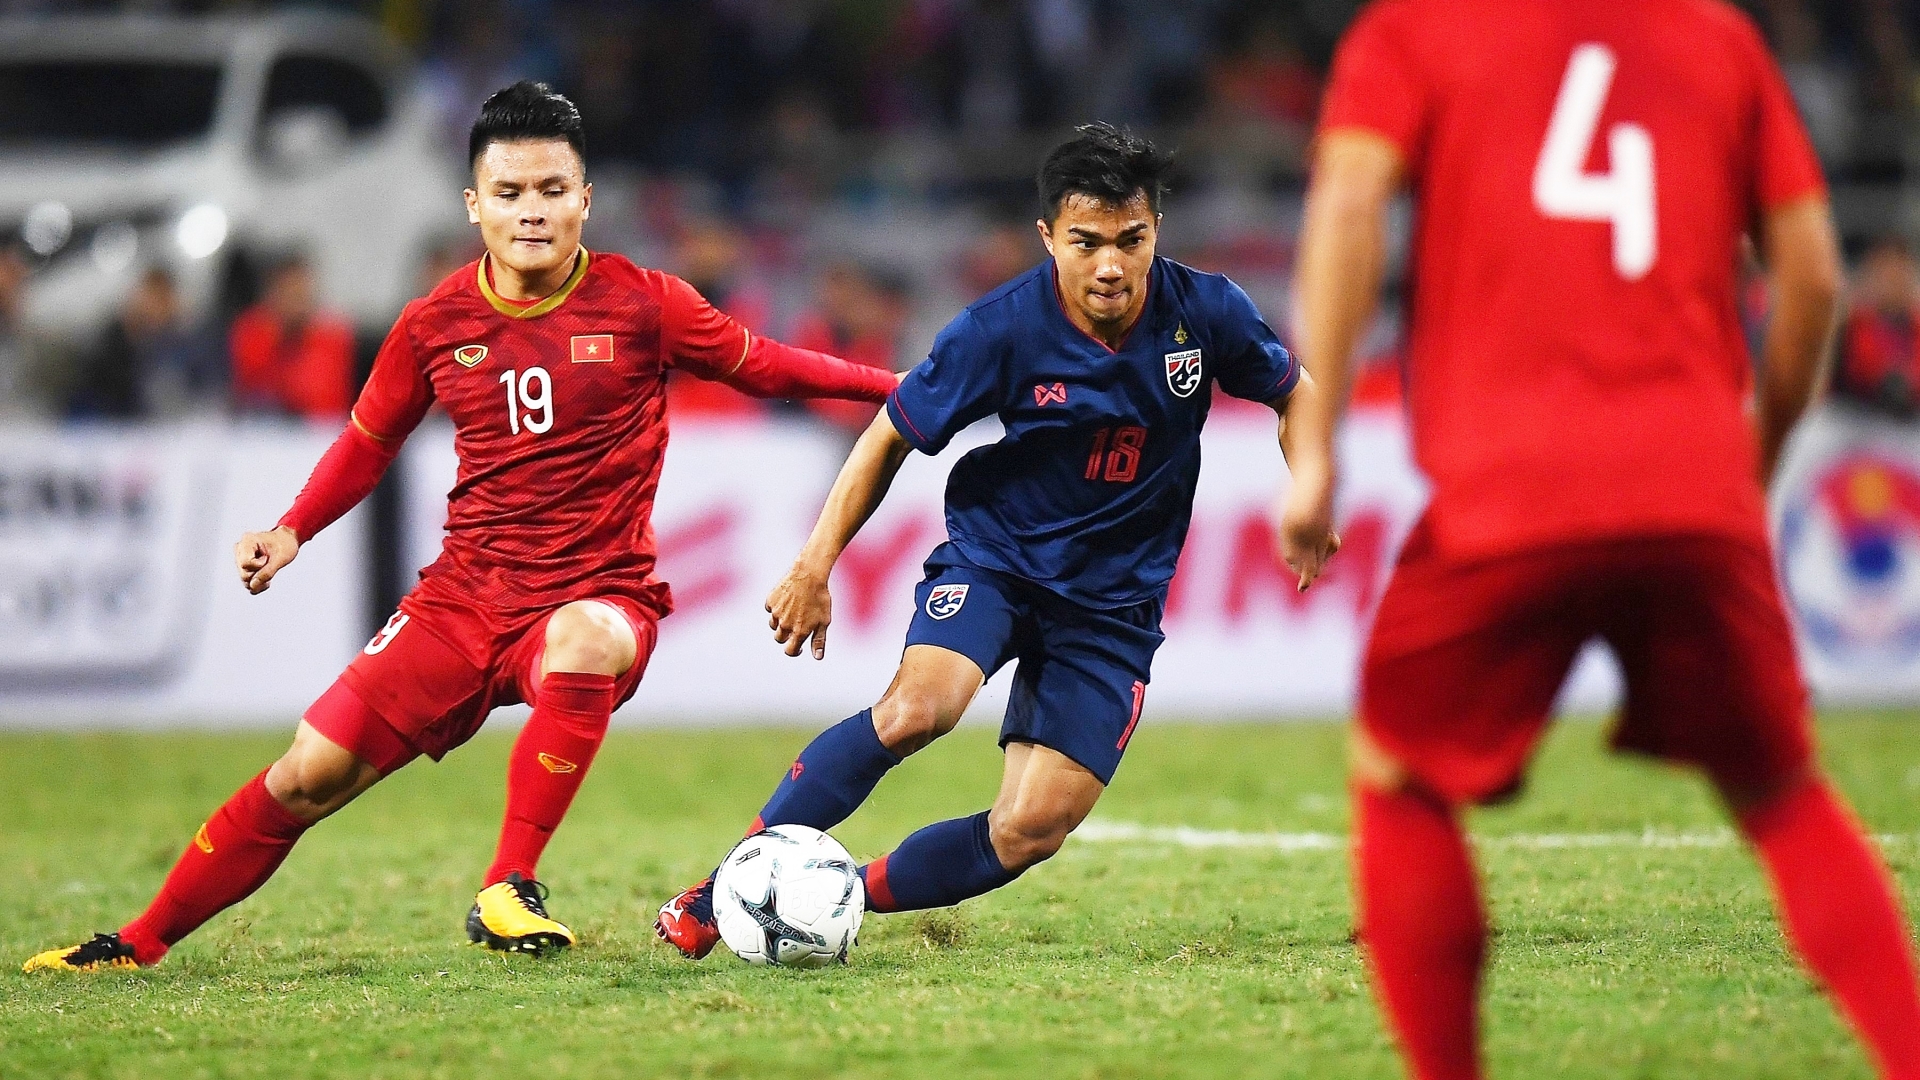 Quang hai vs chanathip, world cup 2022